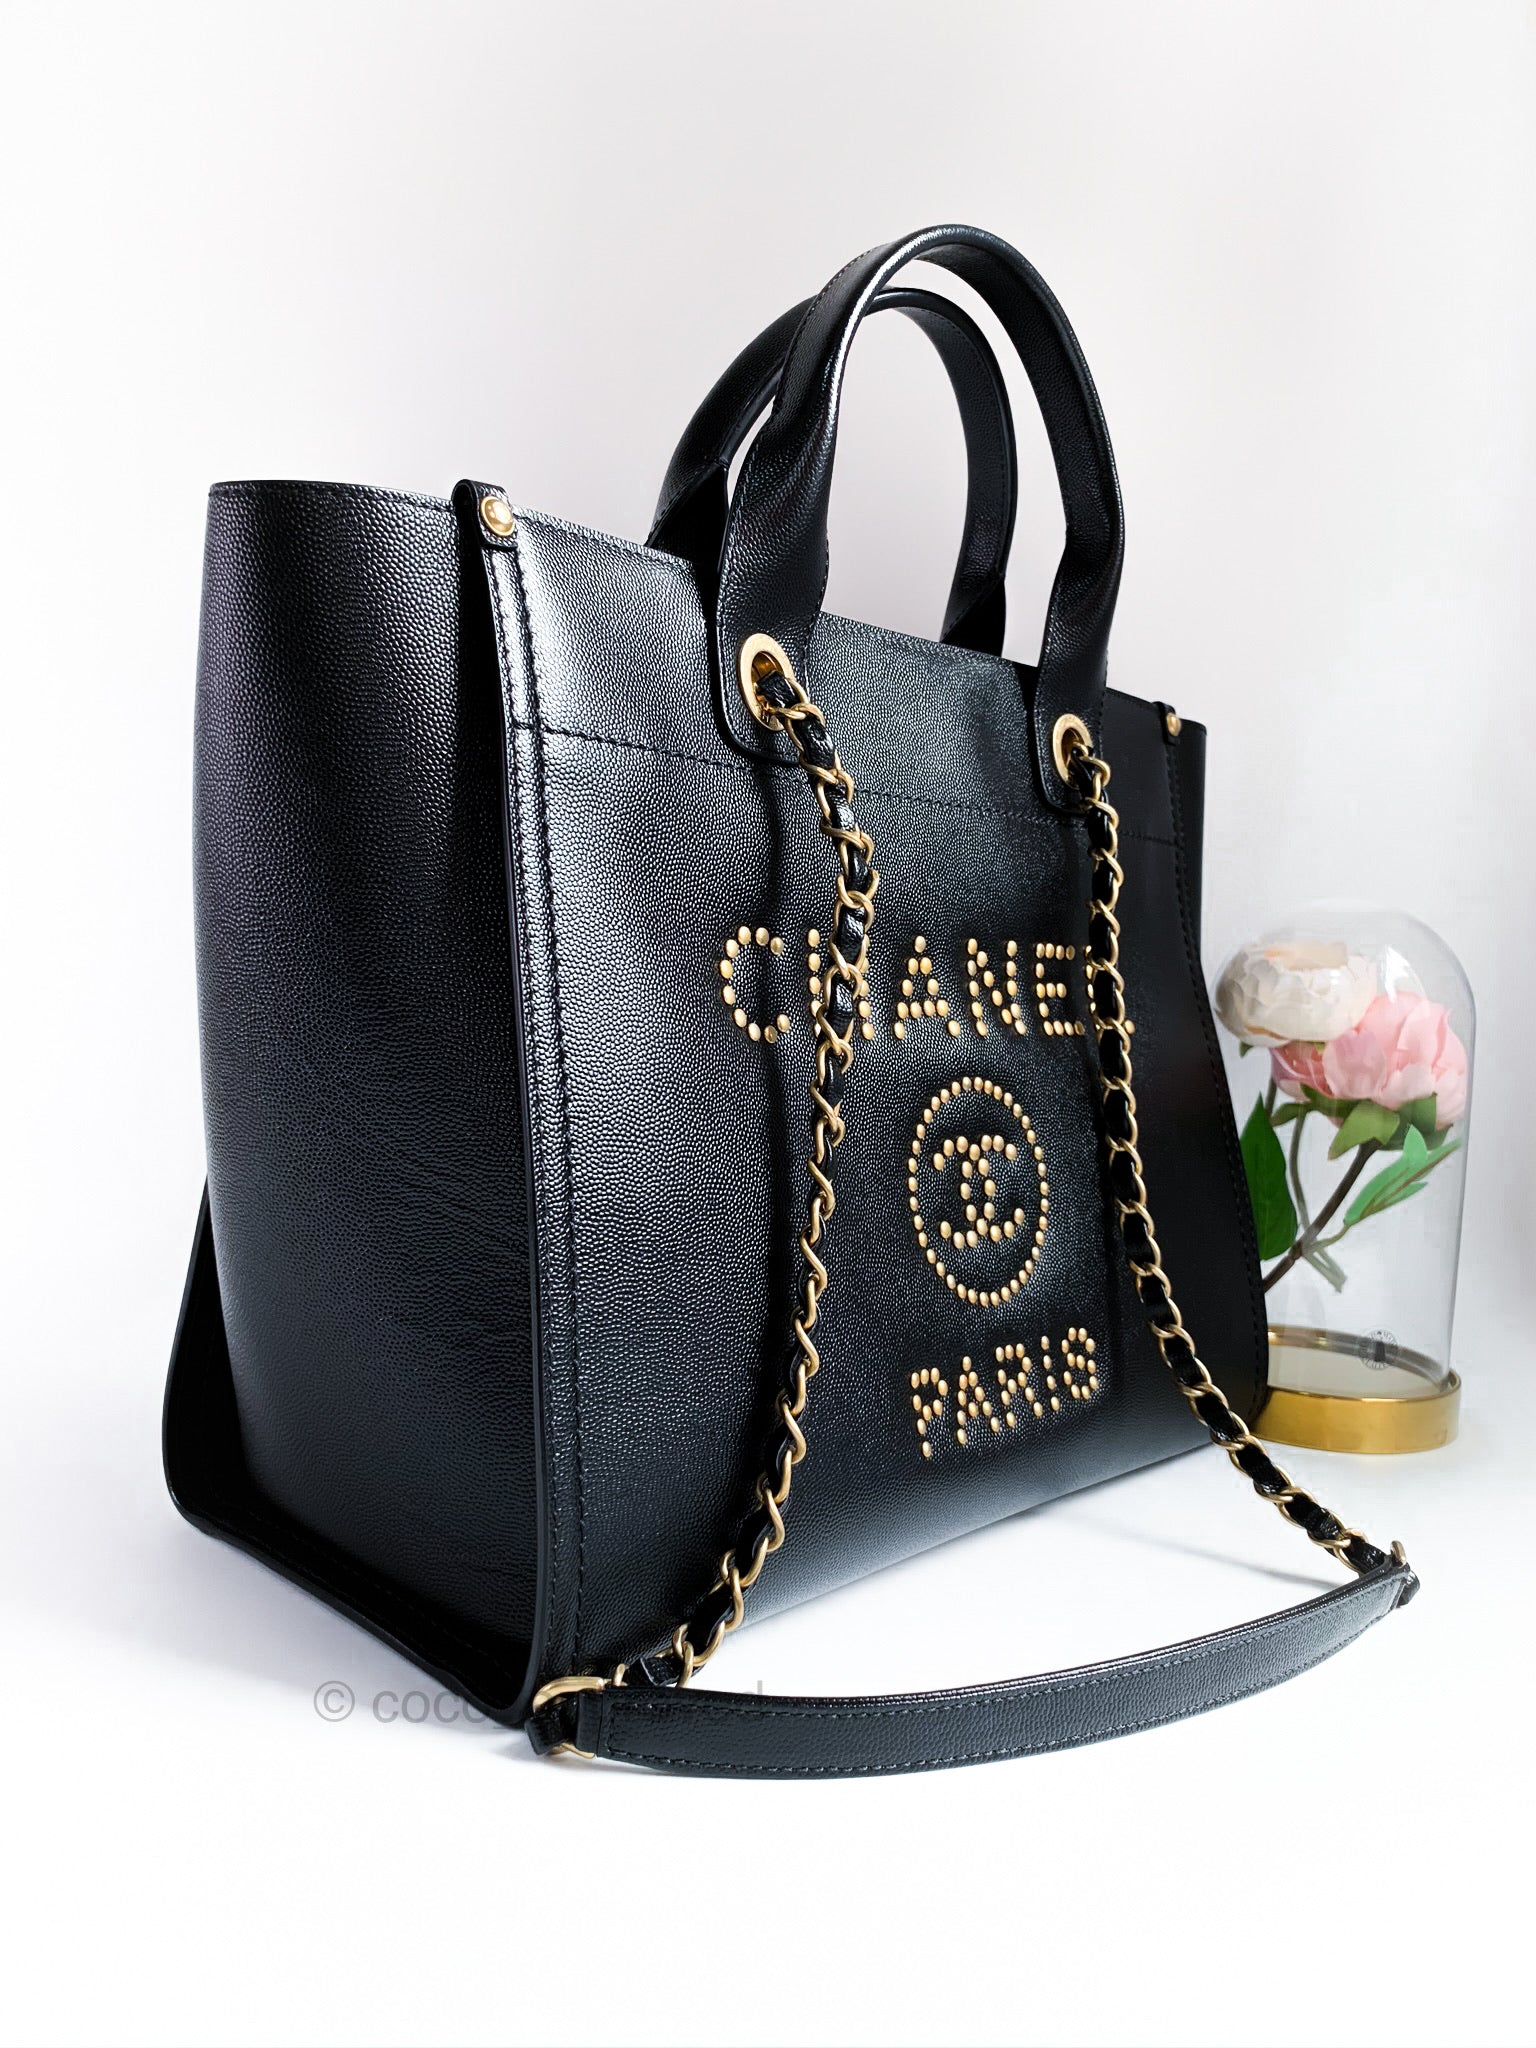 Chanel Small Studded Deauville Tote Black Caviar Gold Hardware